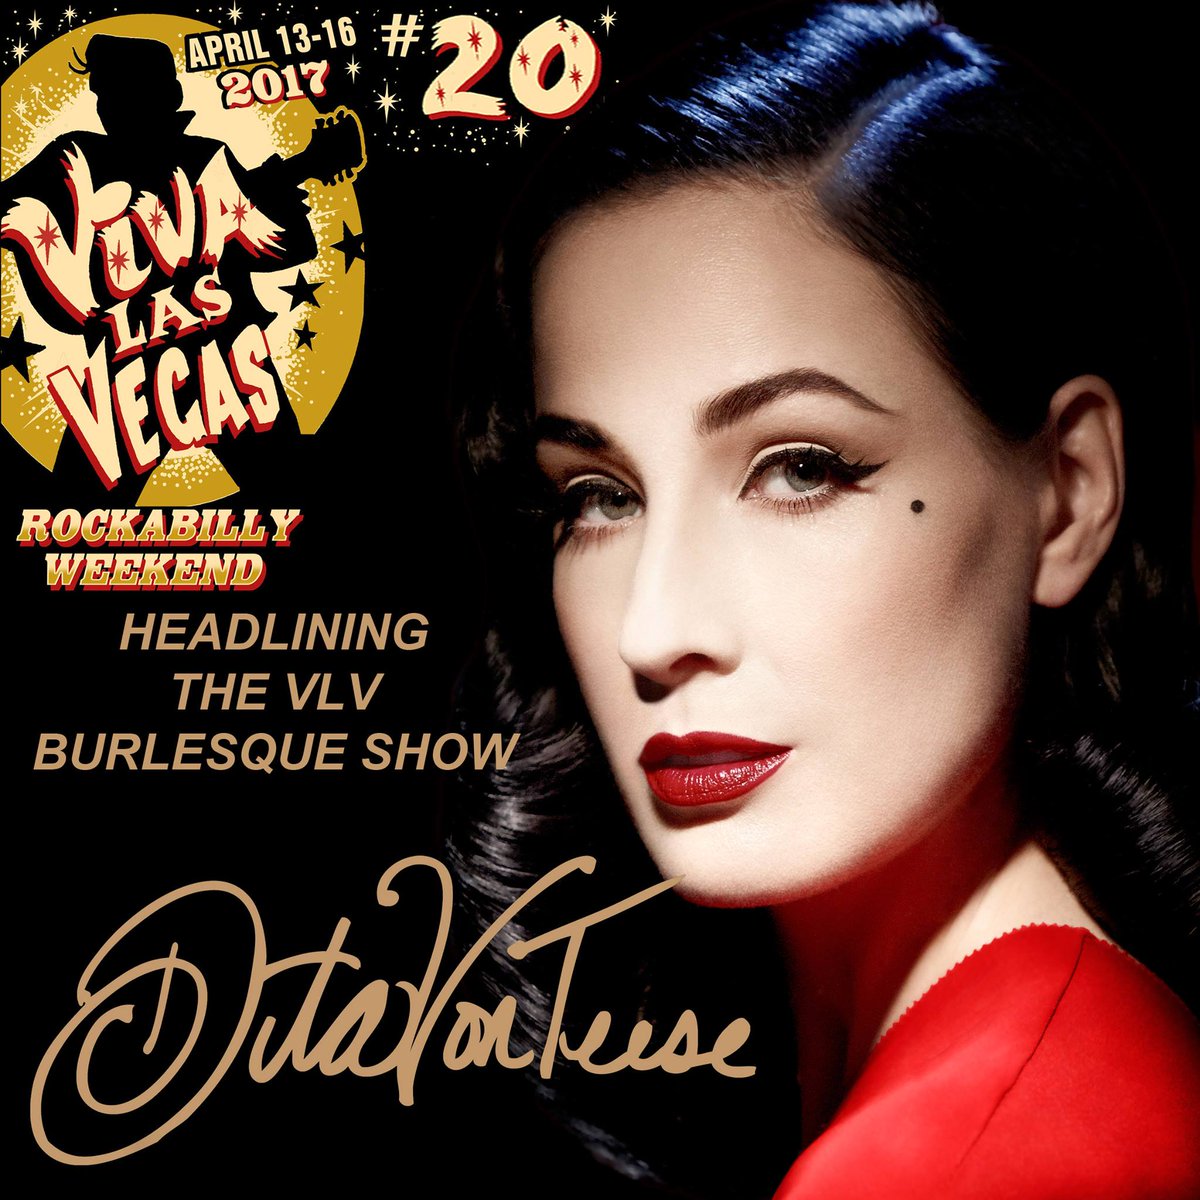 RT @BurlesqueOnline: EXCLUSIVE: Dita Von Teese to headline at Viva Las Vegas Rockabilly Weekend 2017! @DitaVonTeese @TomPIngram #VLV20 http…